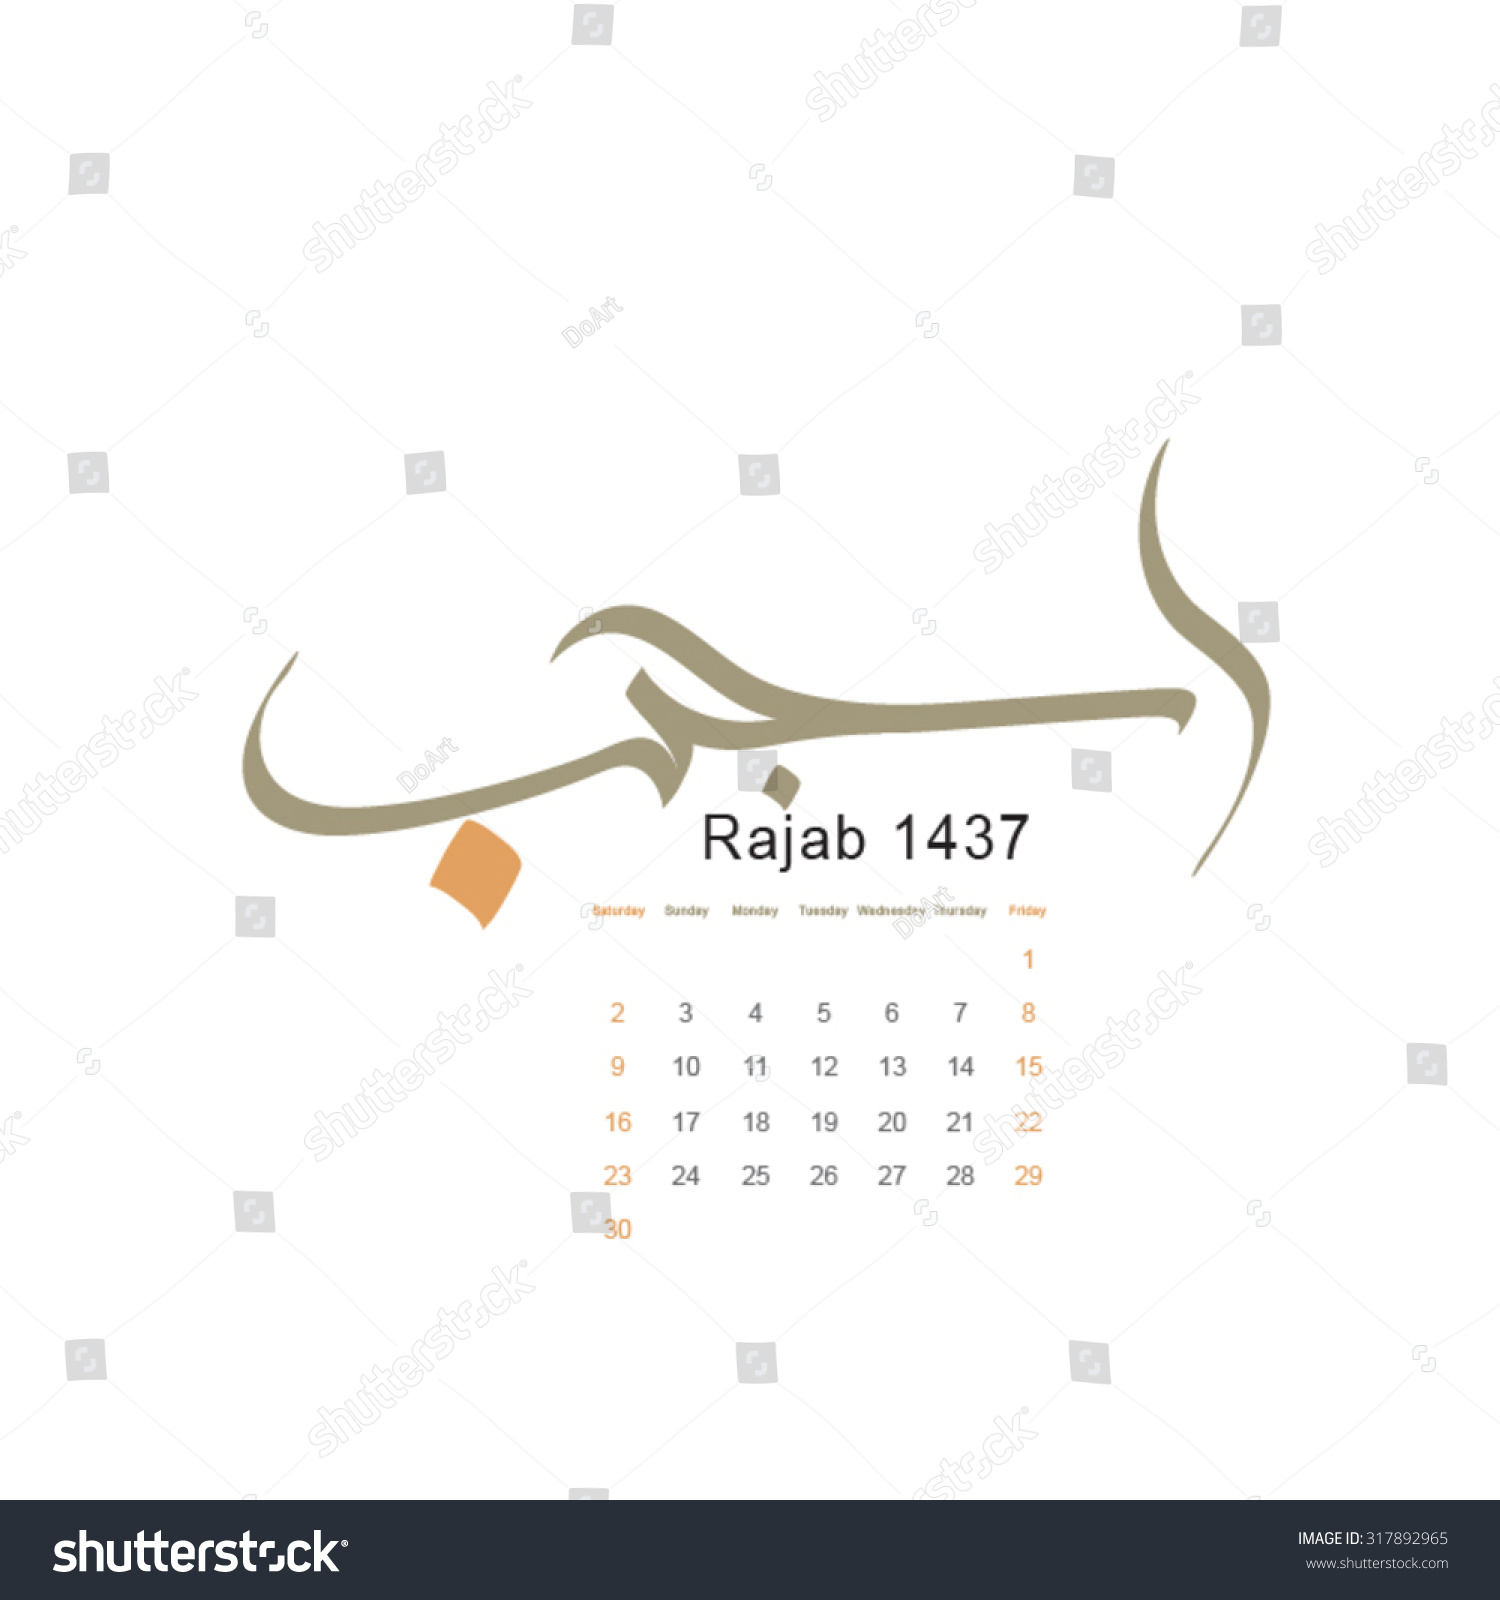 Rajab Rejab 7th Month Lunar Based Stock Vector (Royalty Free) 317892965